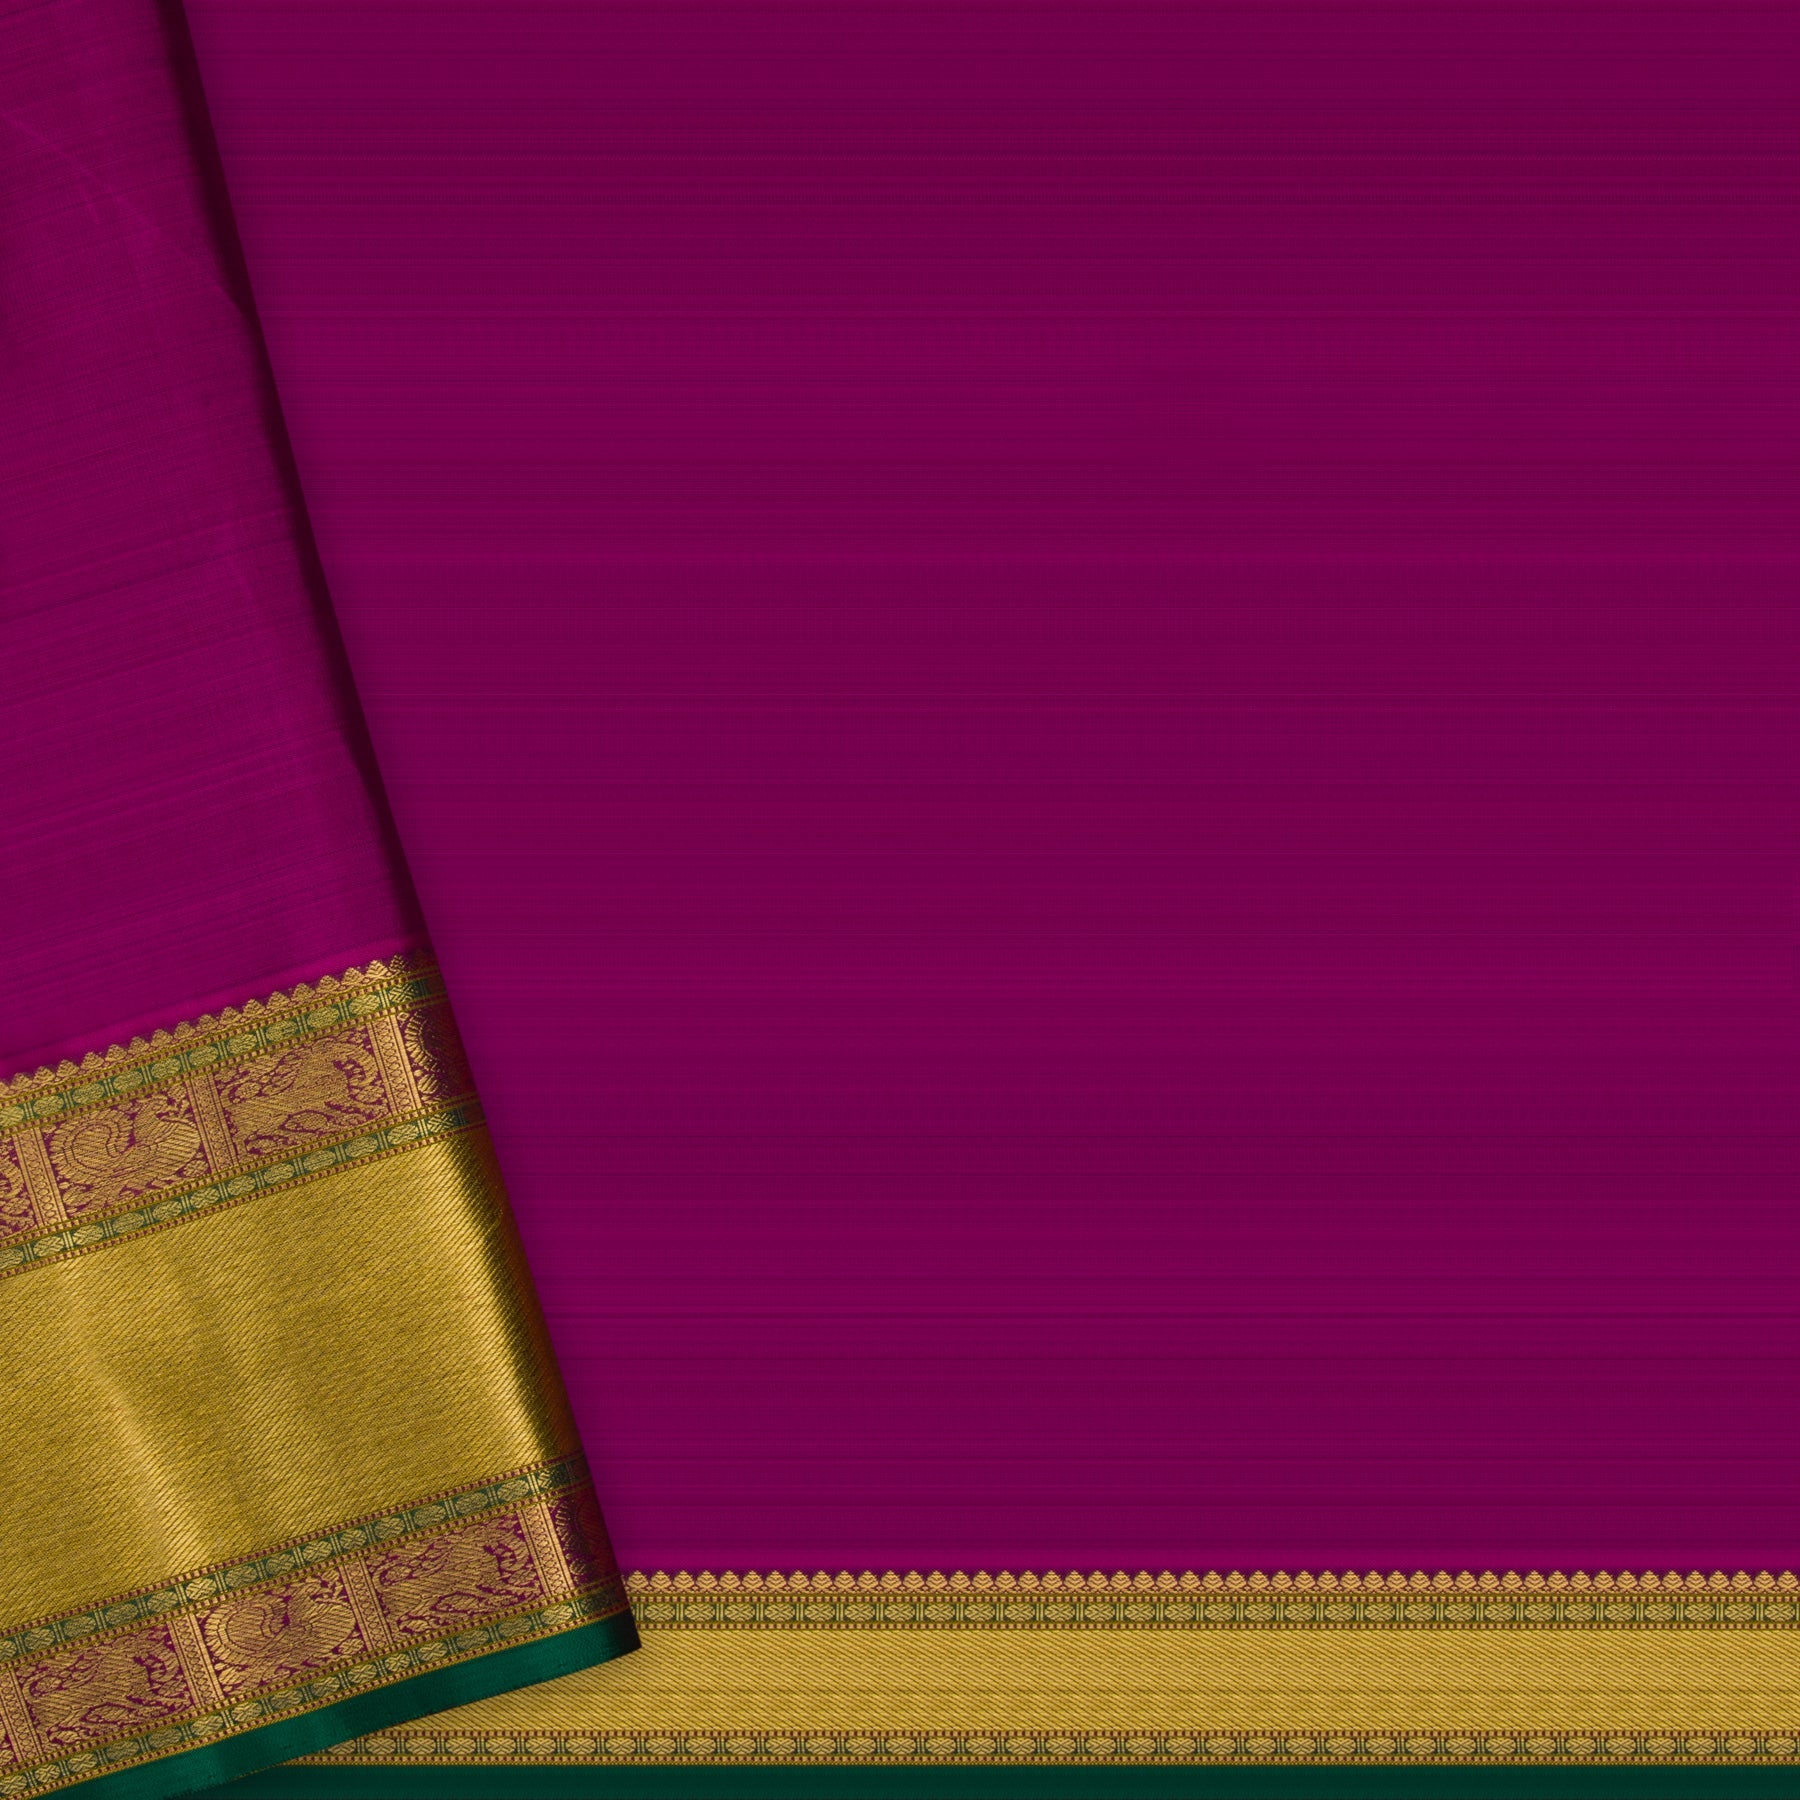 Kanakavalli Kanjivaram Silk Sari 23-110-HS001-09959 - Blouse View